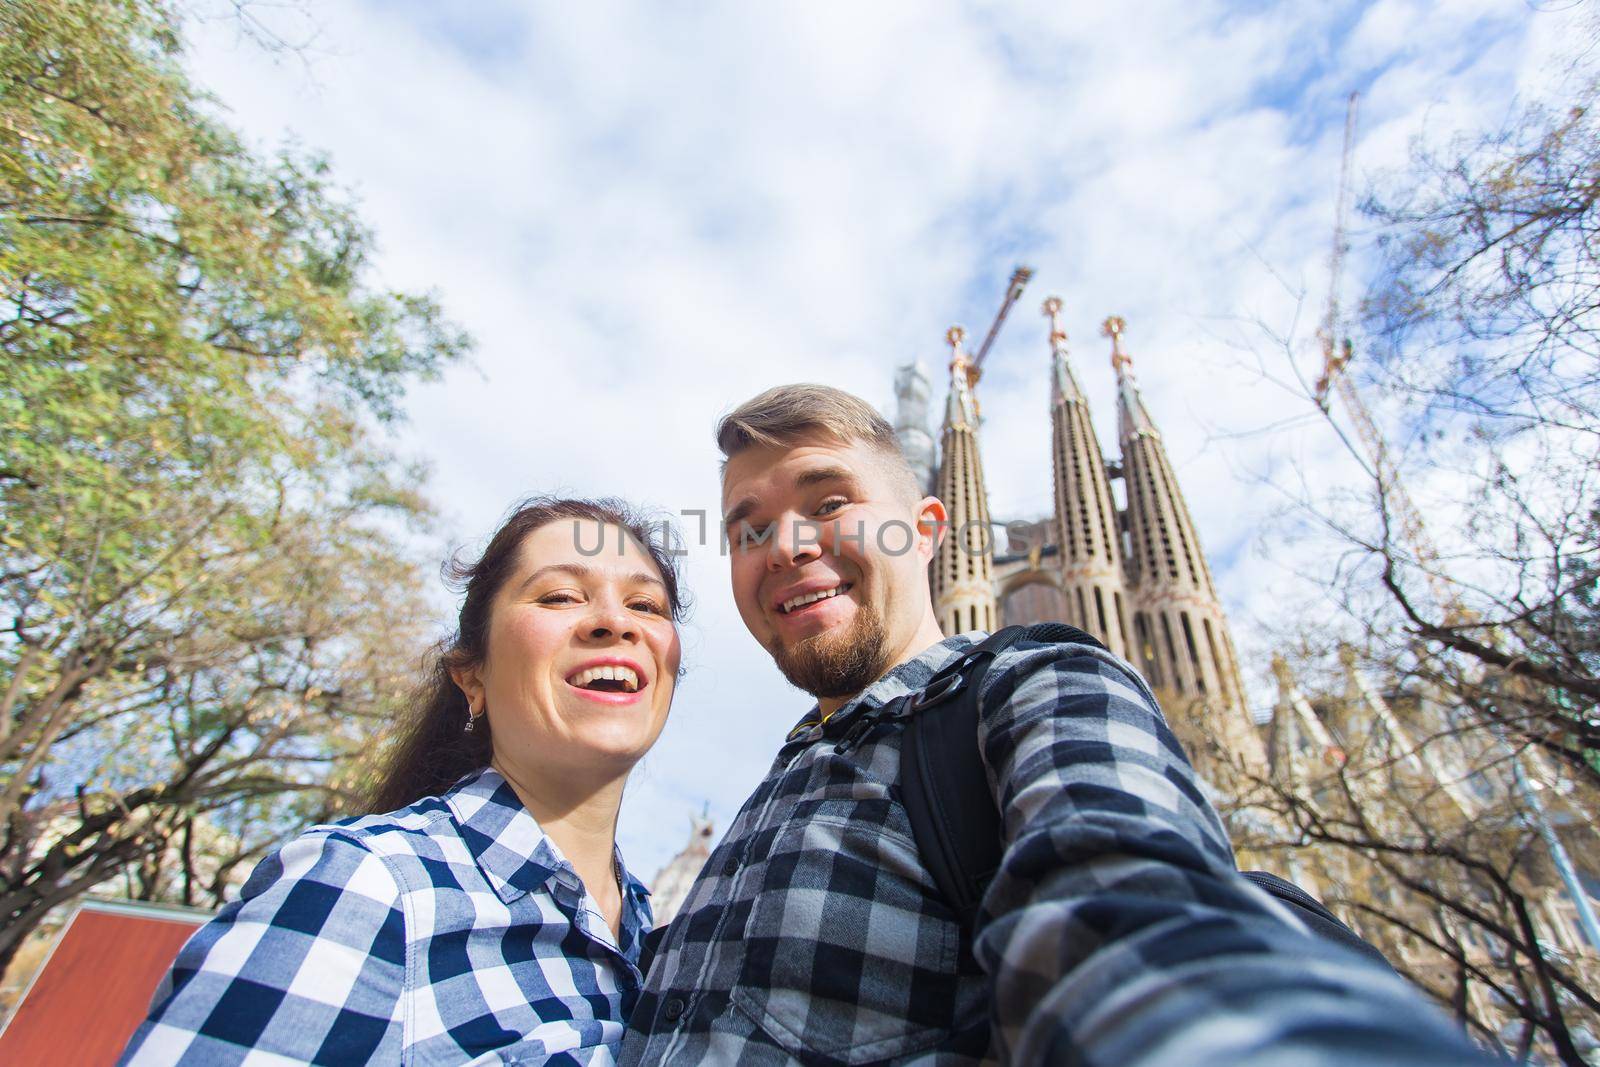 BARCELONA, SPAIN - FEBRUARY 6, 2018: Happy tourists photographing in front of the famous Sagrada Familia roman catholic church in Barcelona, architect Antoni Gaudi.